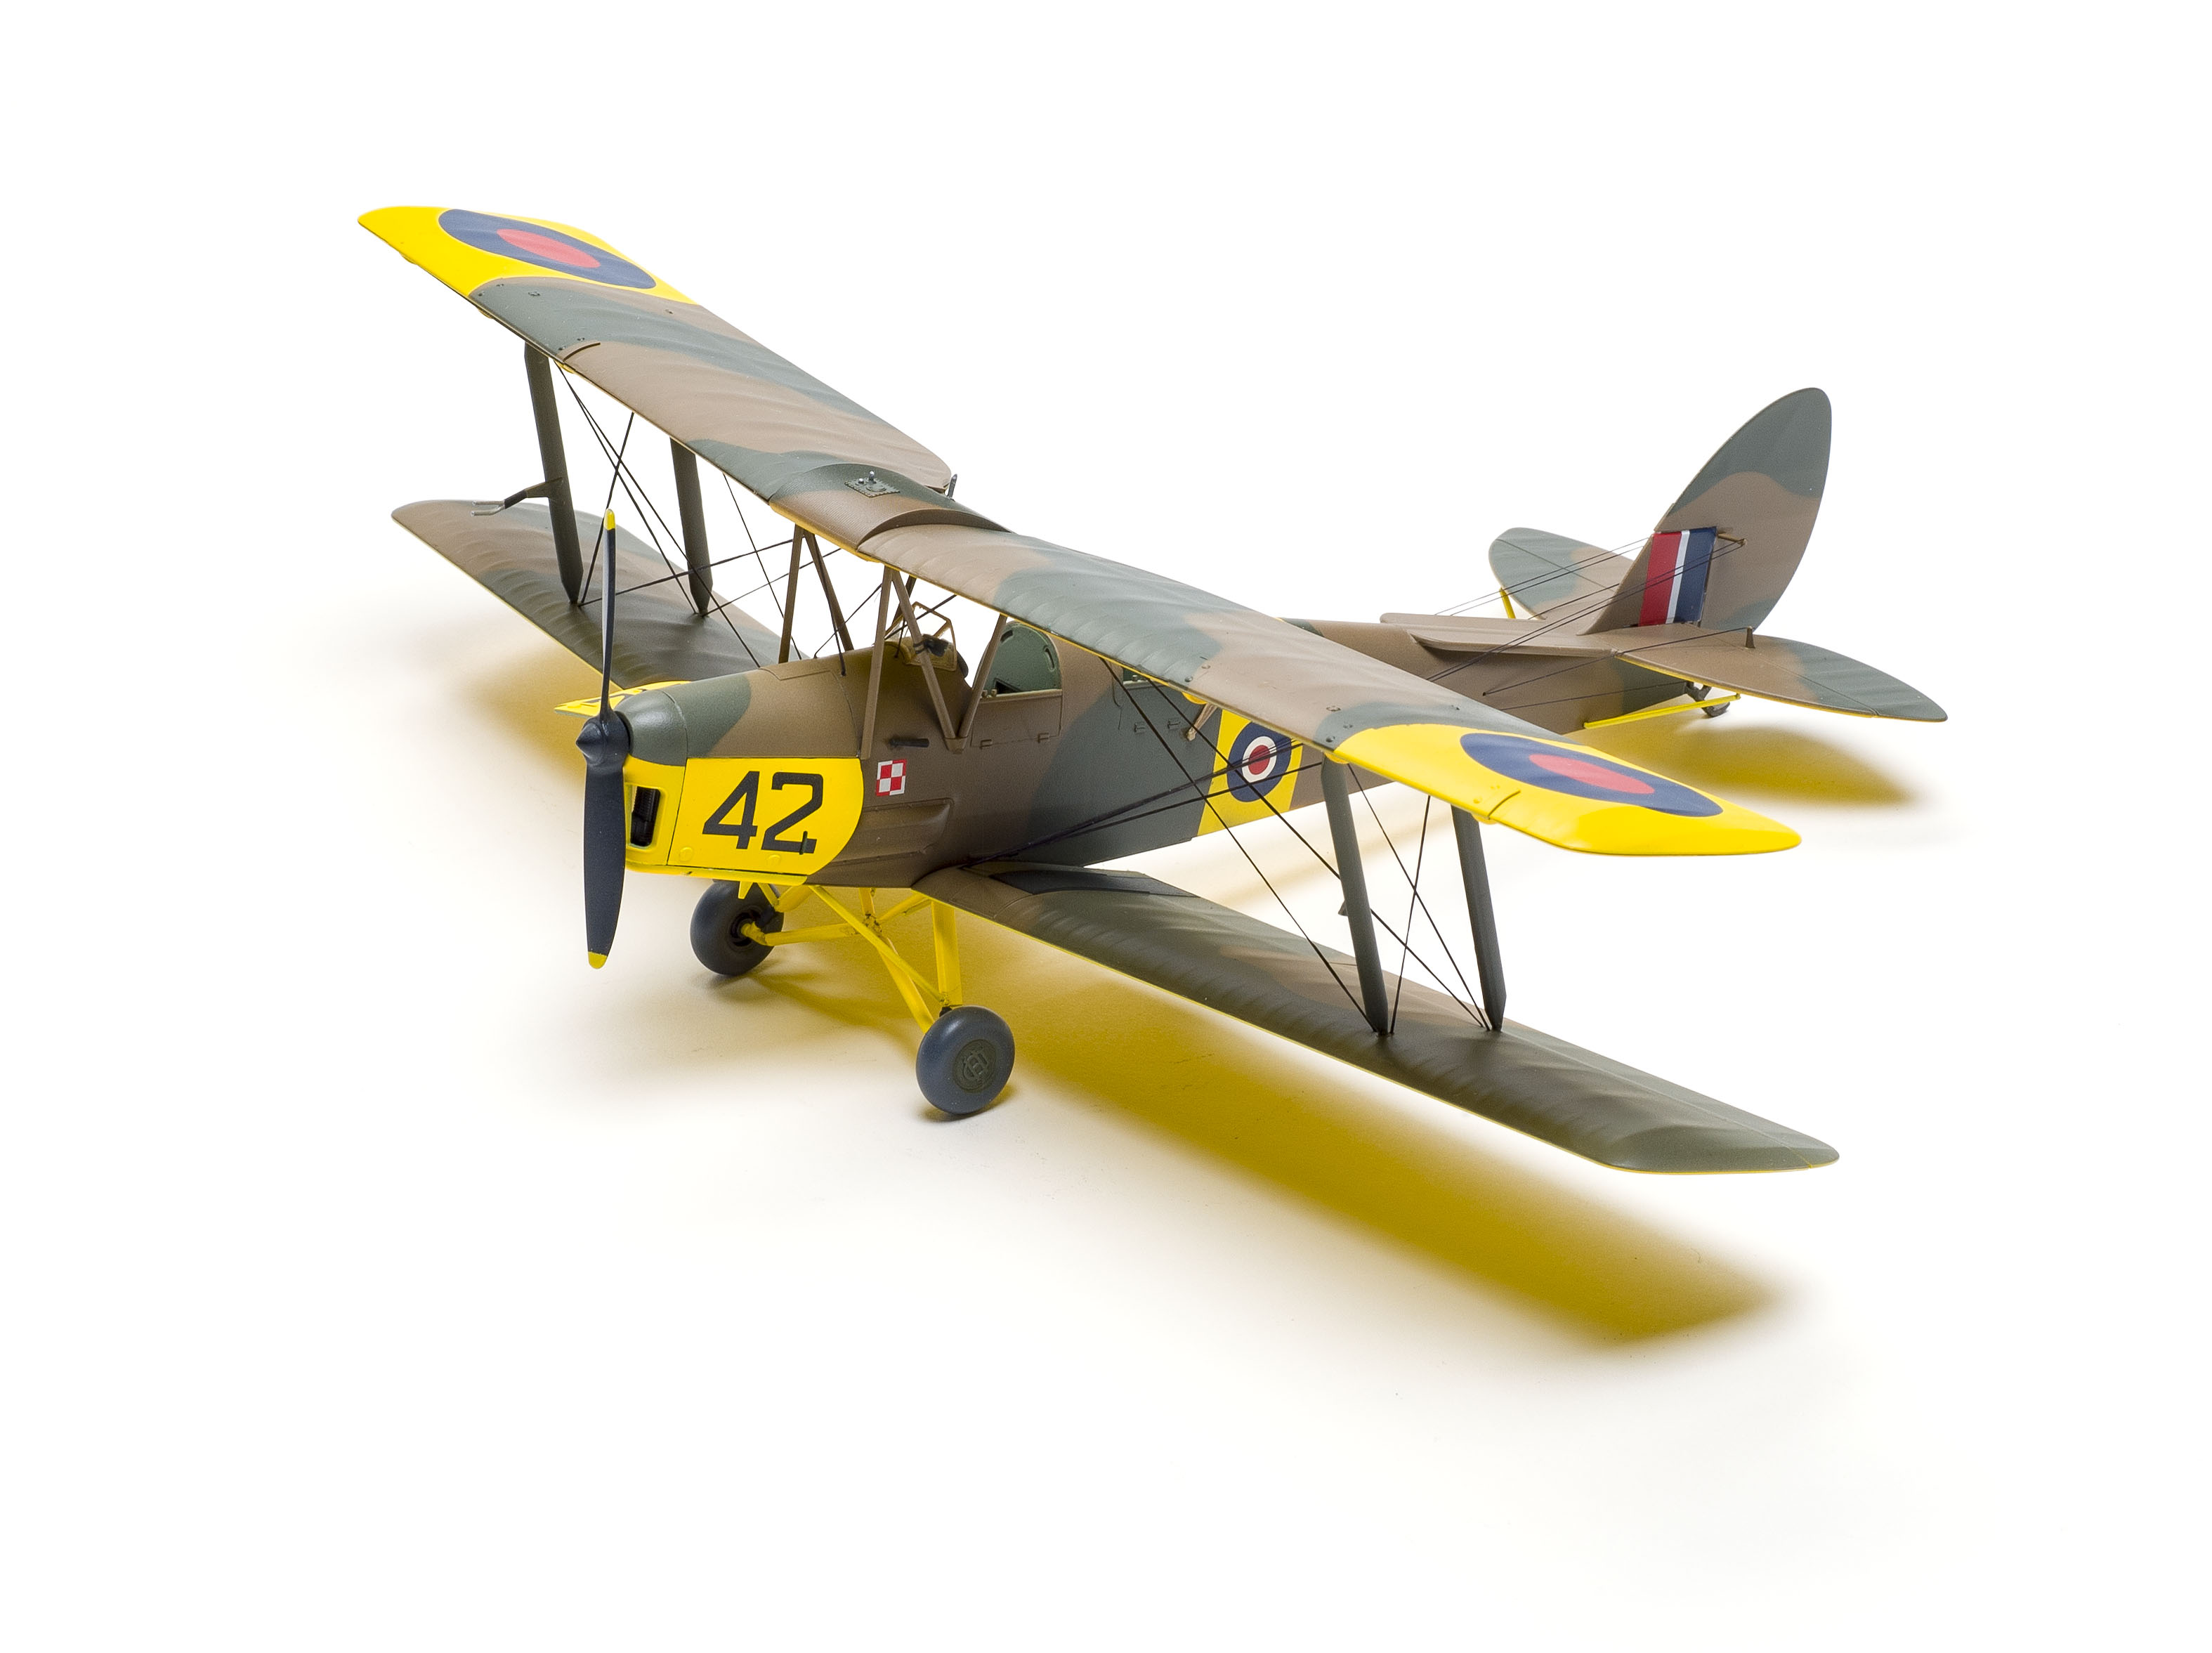 Biplane Fold-Up Cardboard Aircraft Model DIY Build Hobby Airplane Kit BROWN 